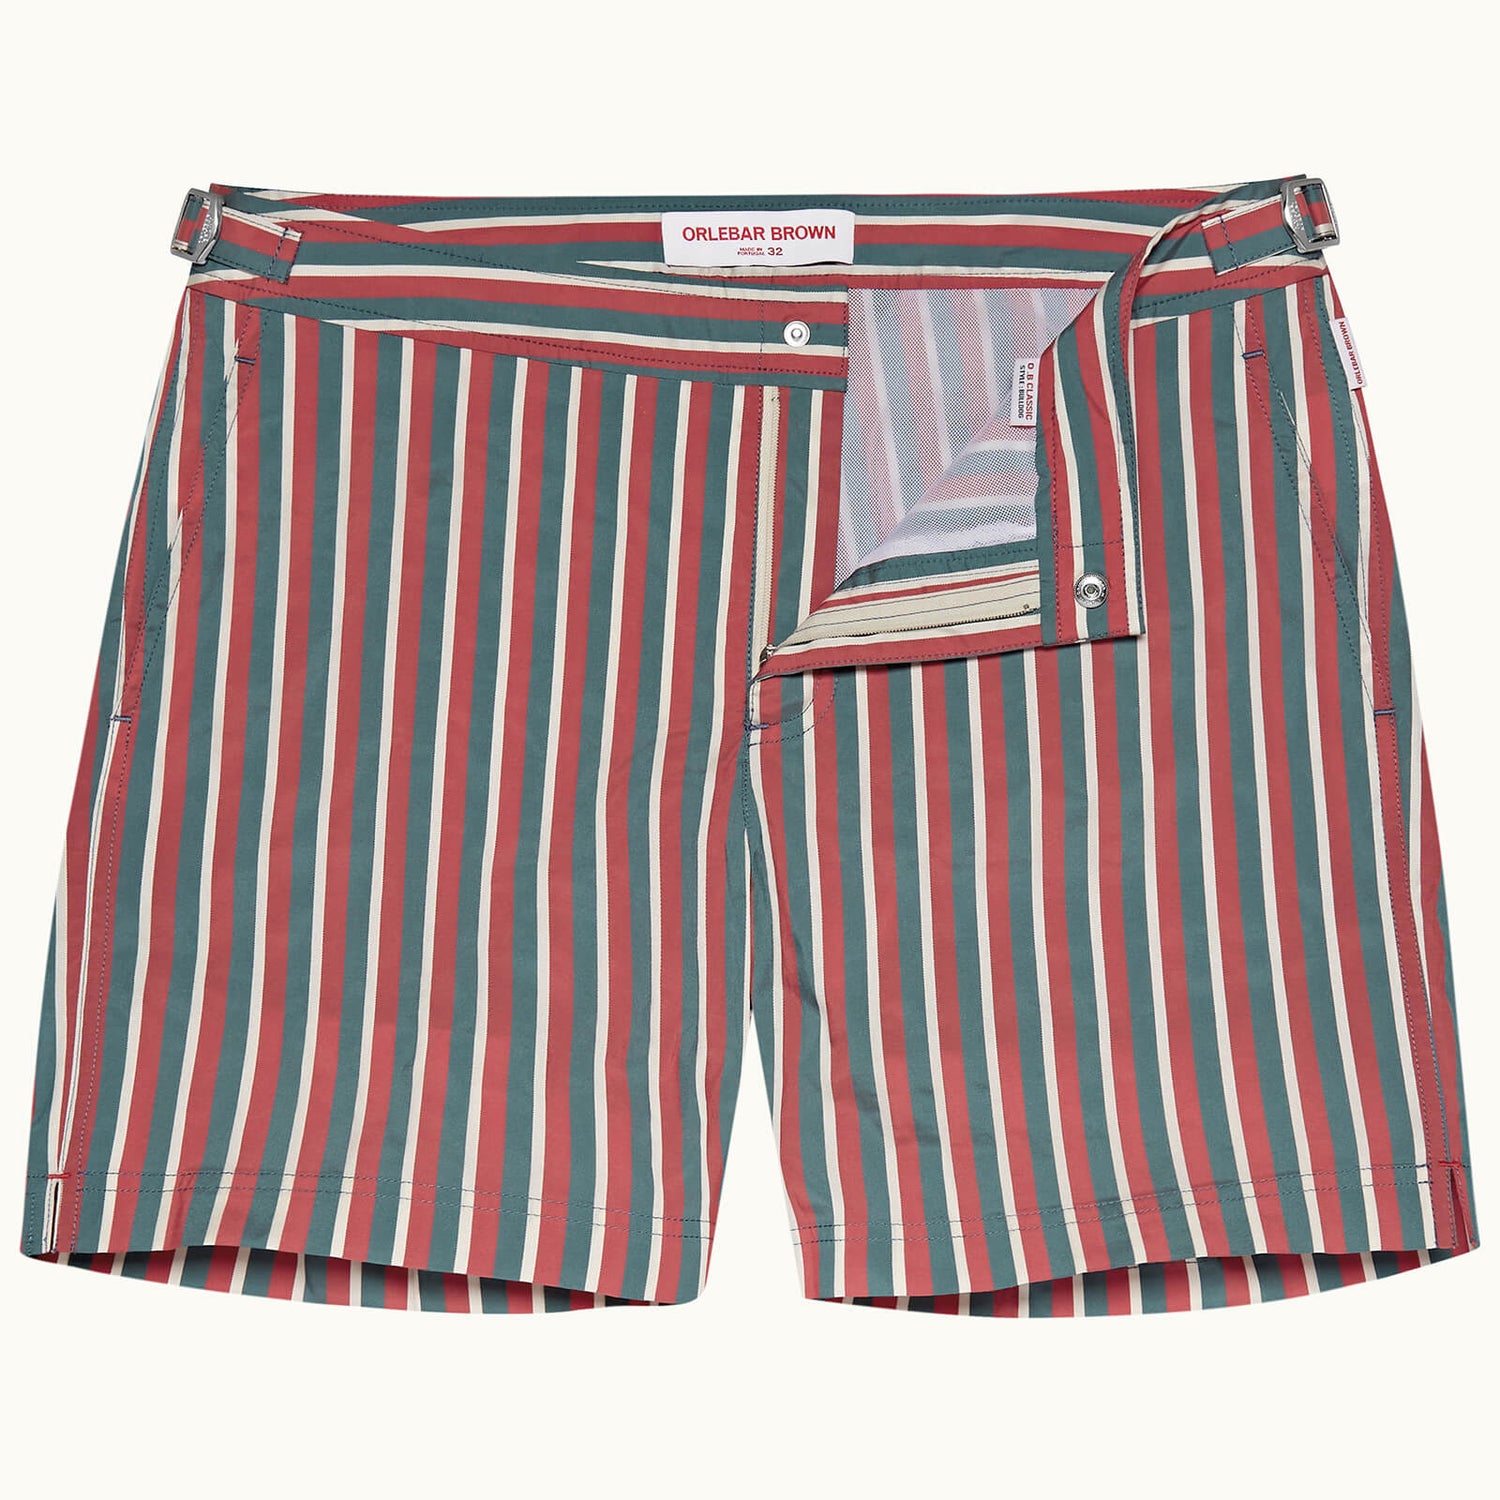 Orlebar Brown Men's Bulldog OB Stripe - Summer Red/Marina Aqua